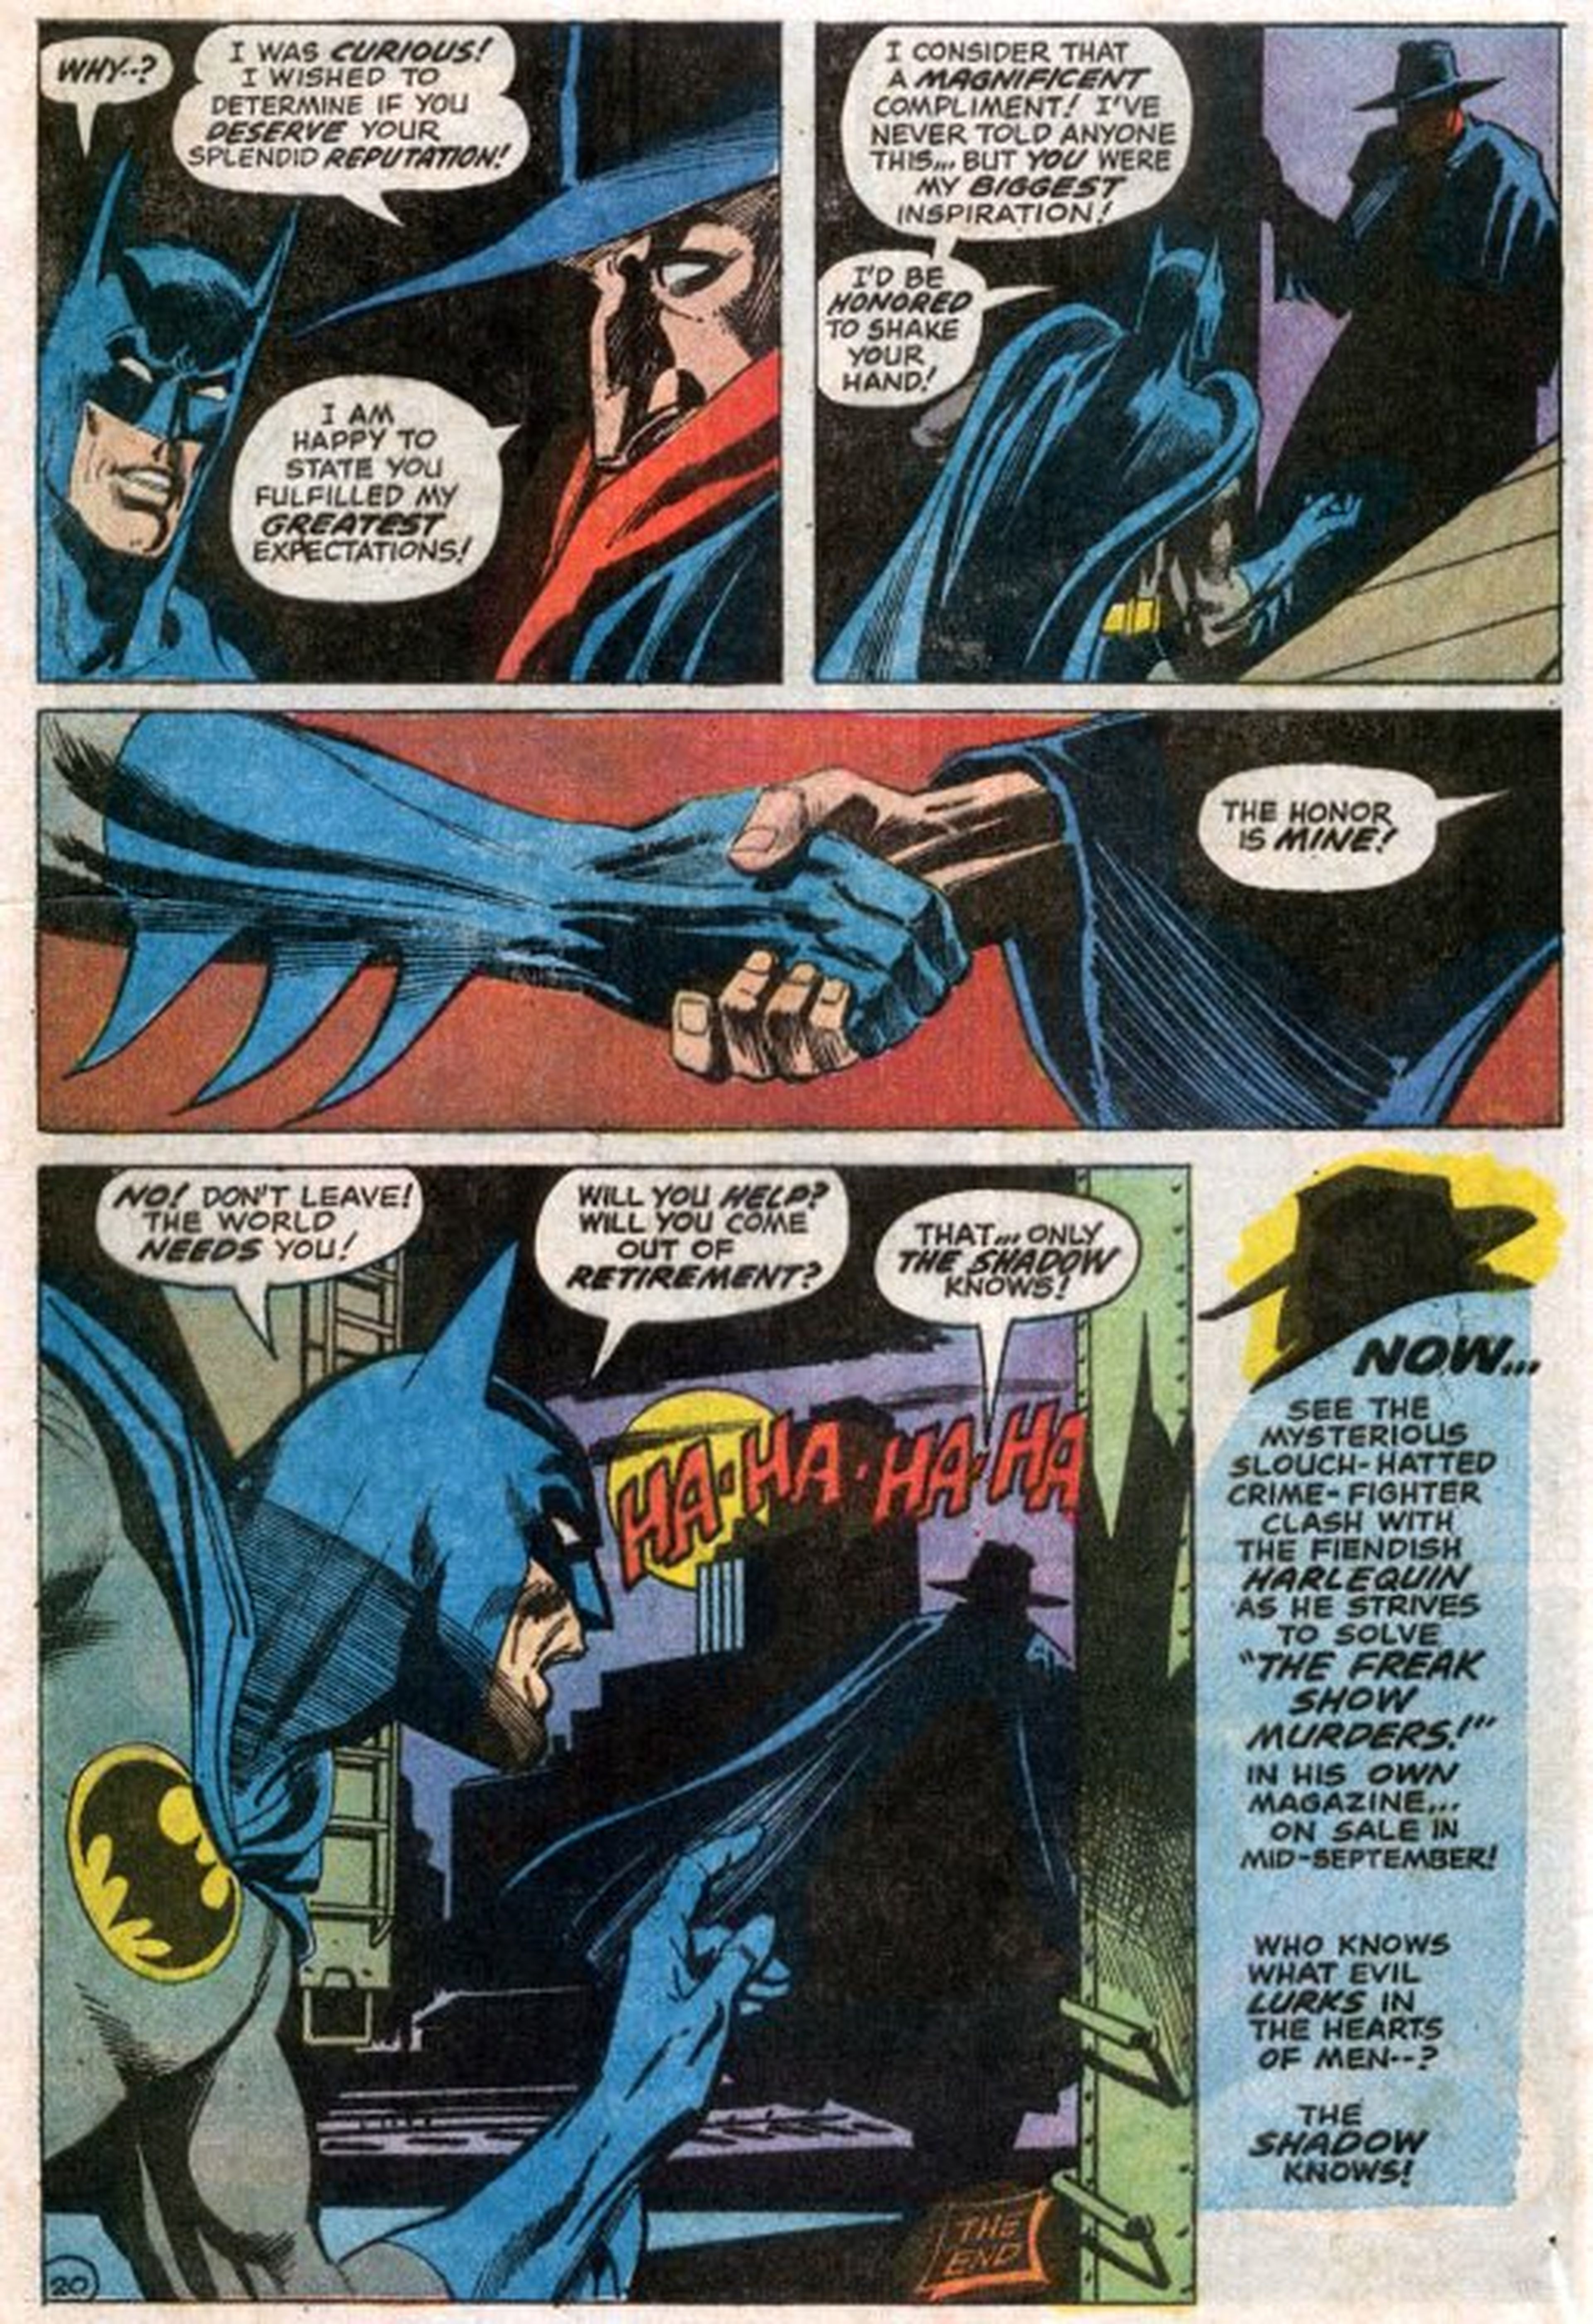 Batman Vol 1 #259: The Night of the Shadow